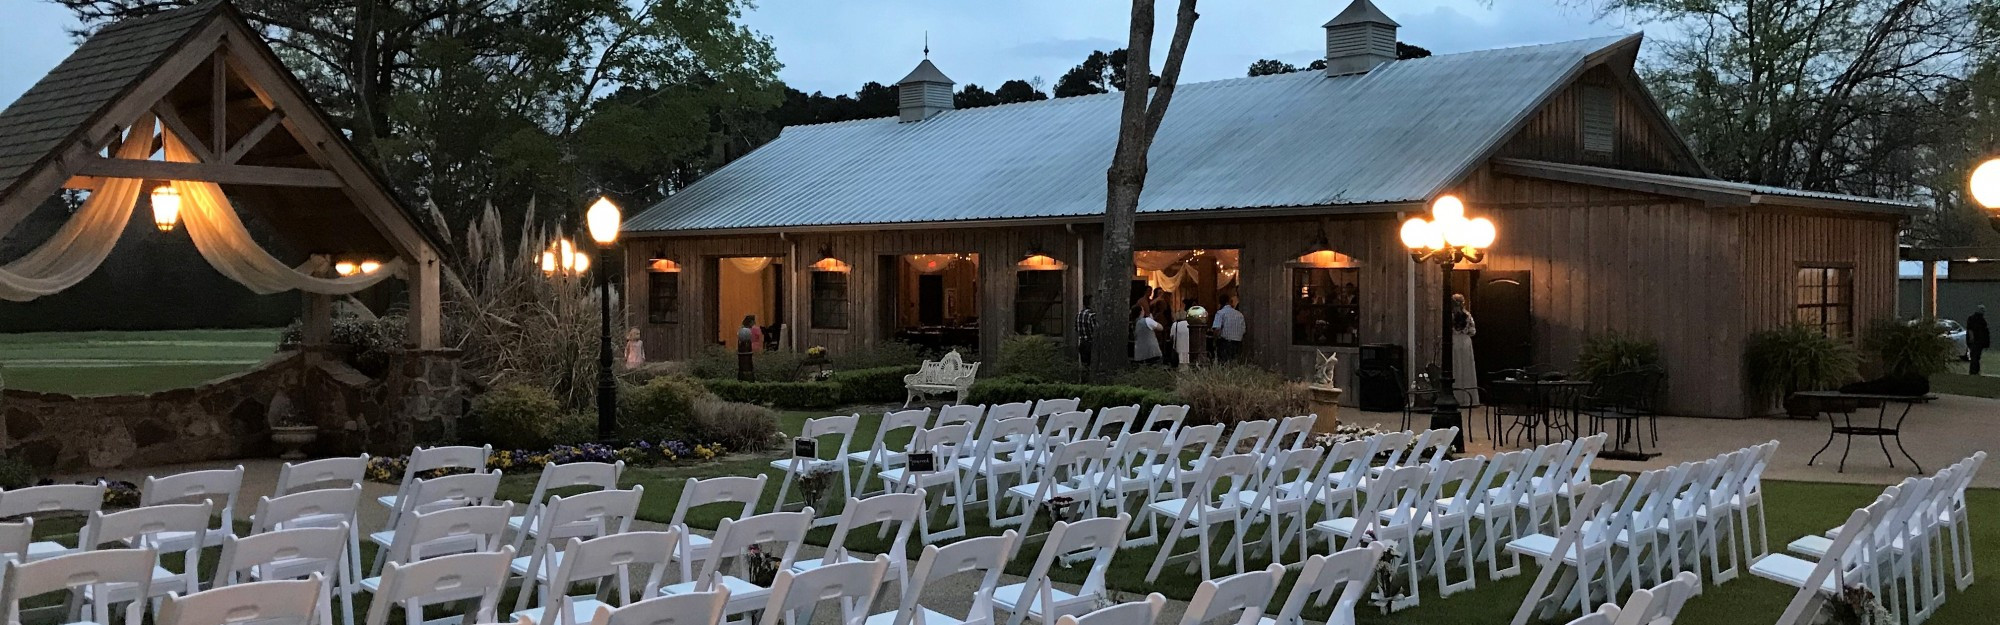 Wedding Venues In East Texas
 Barn Weddings and Reception Venues East Texas Longview